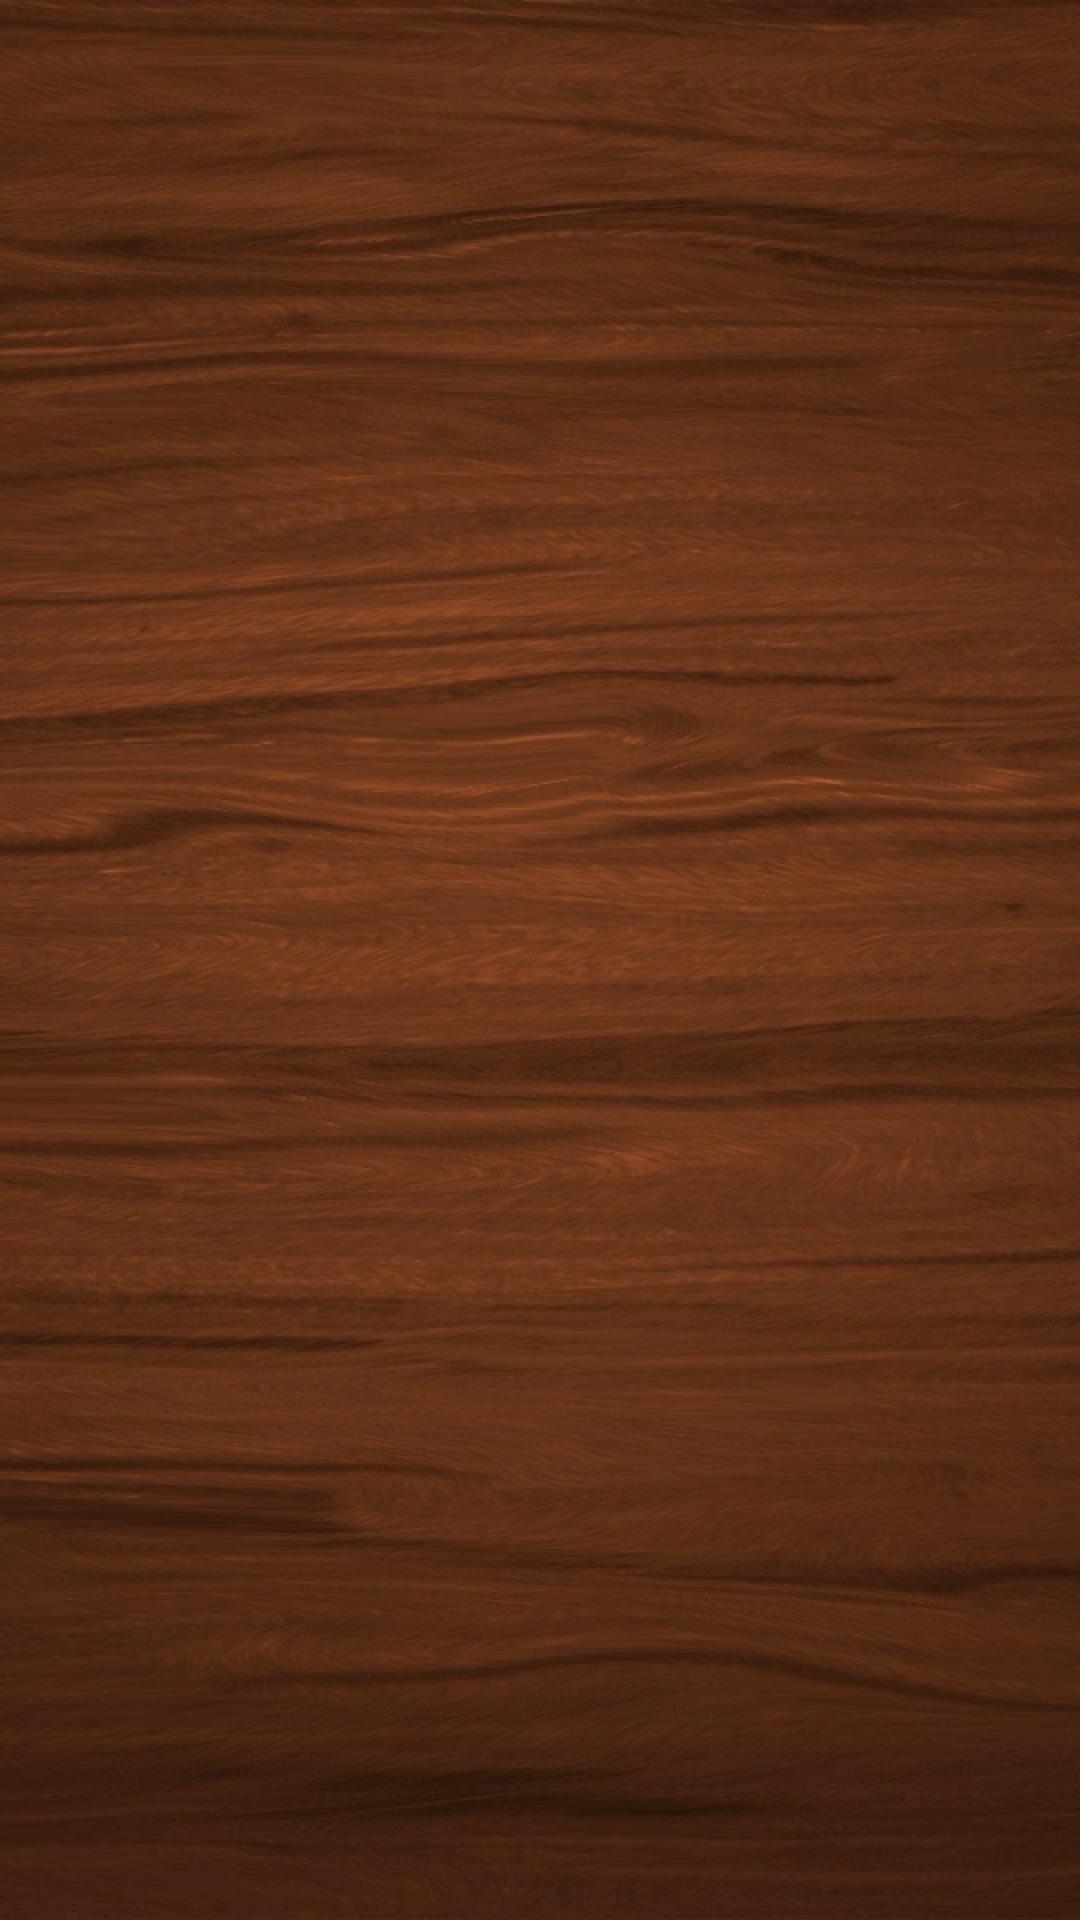 Samsung Galaxy Note Wood iPhone Plus Wallpaper